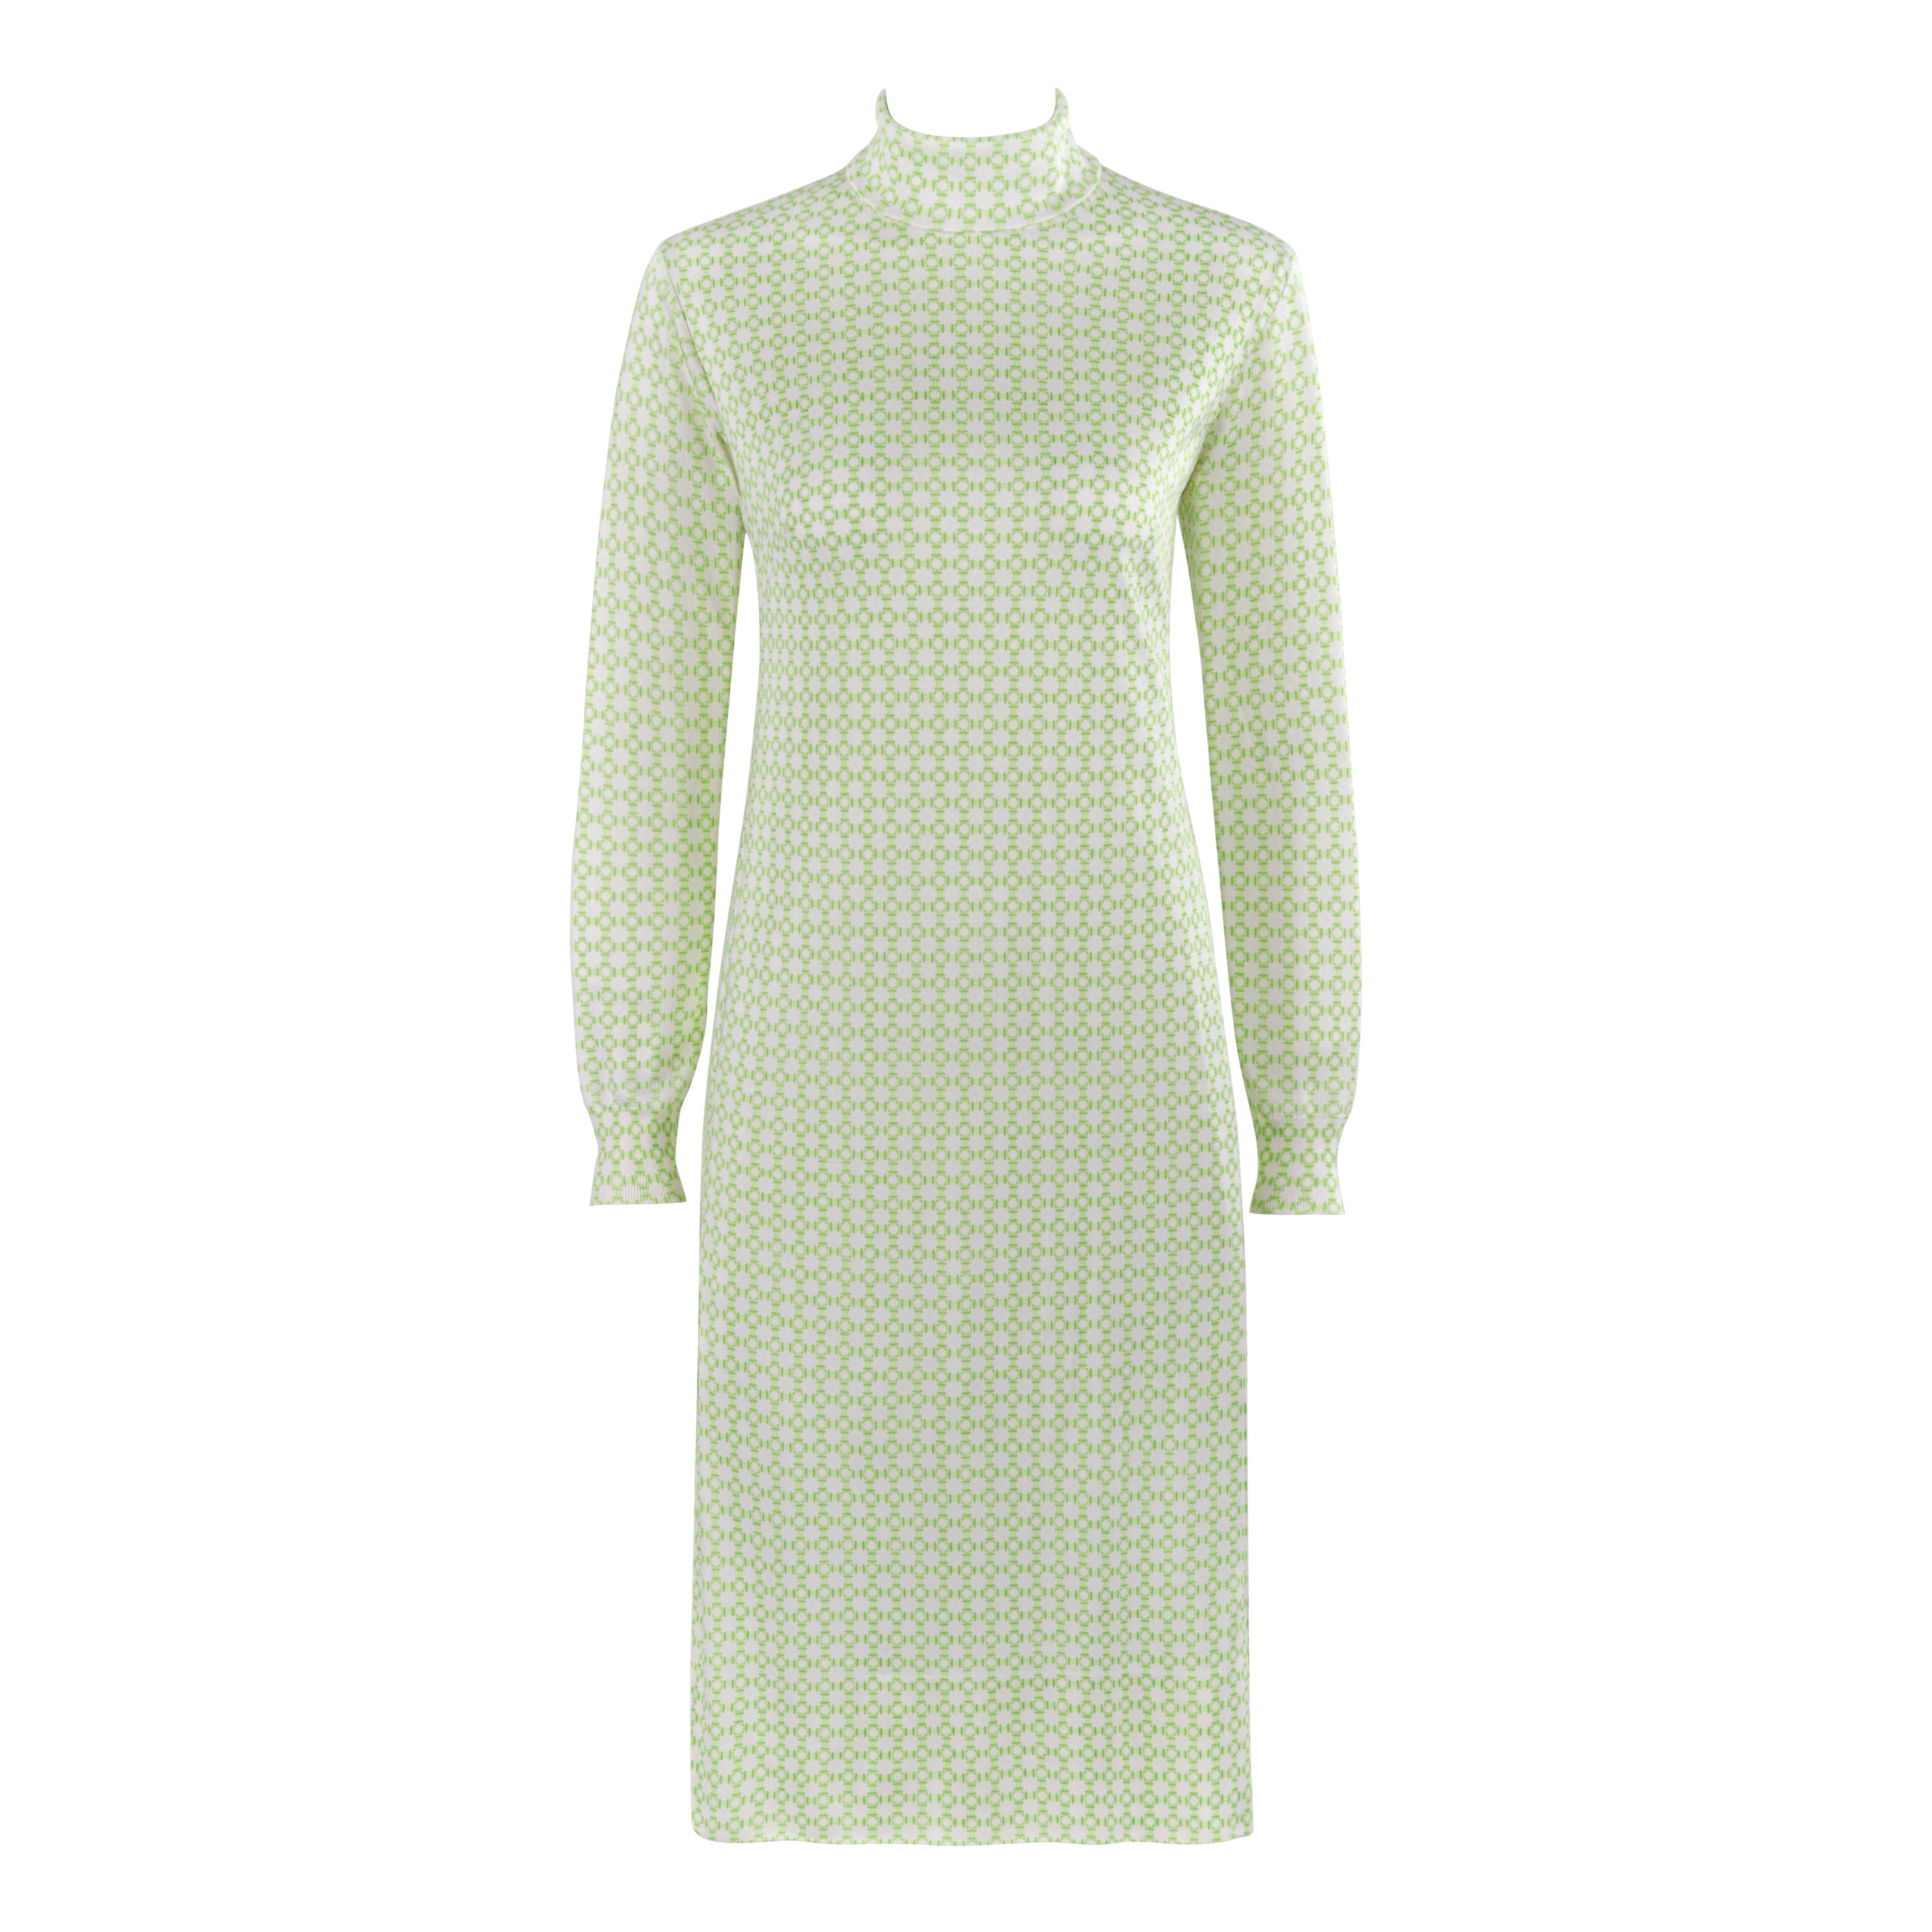 HERMES c.1970s Green White Printed Knit Long Sleeve Turtleneck Midi Dress